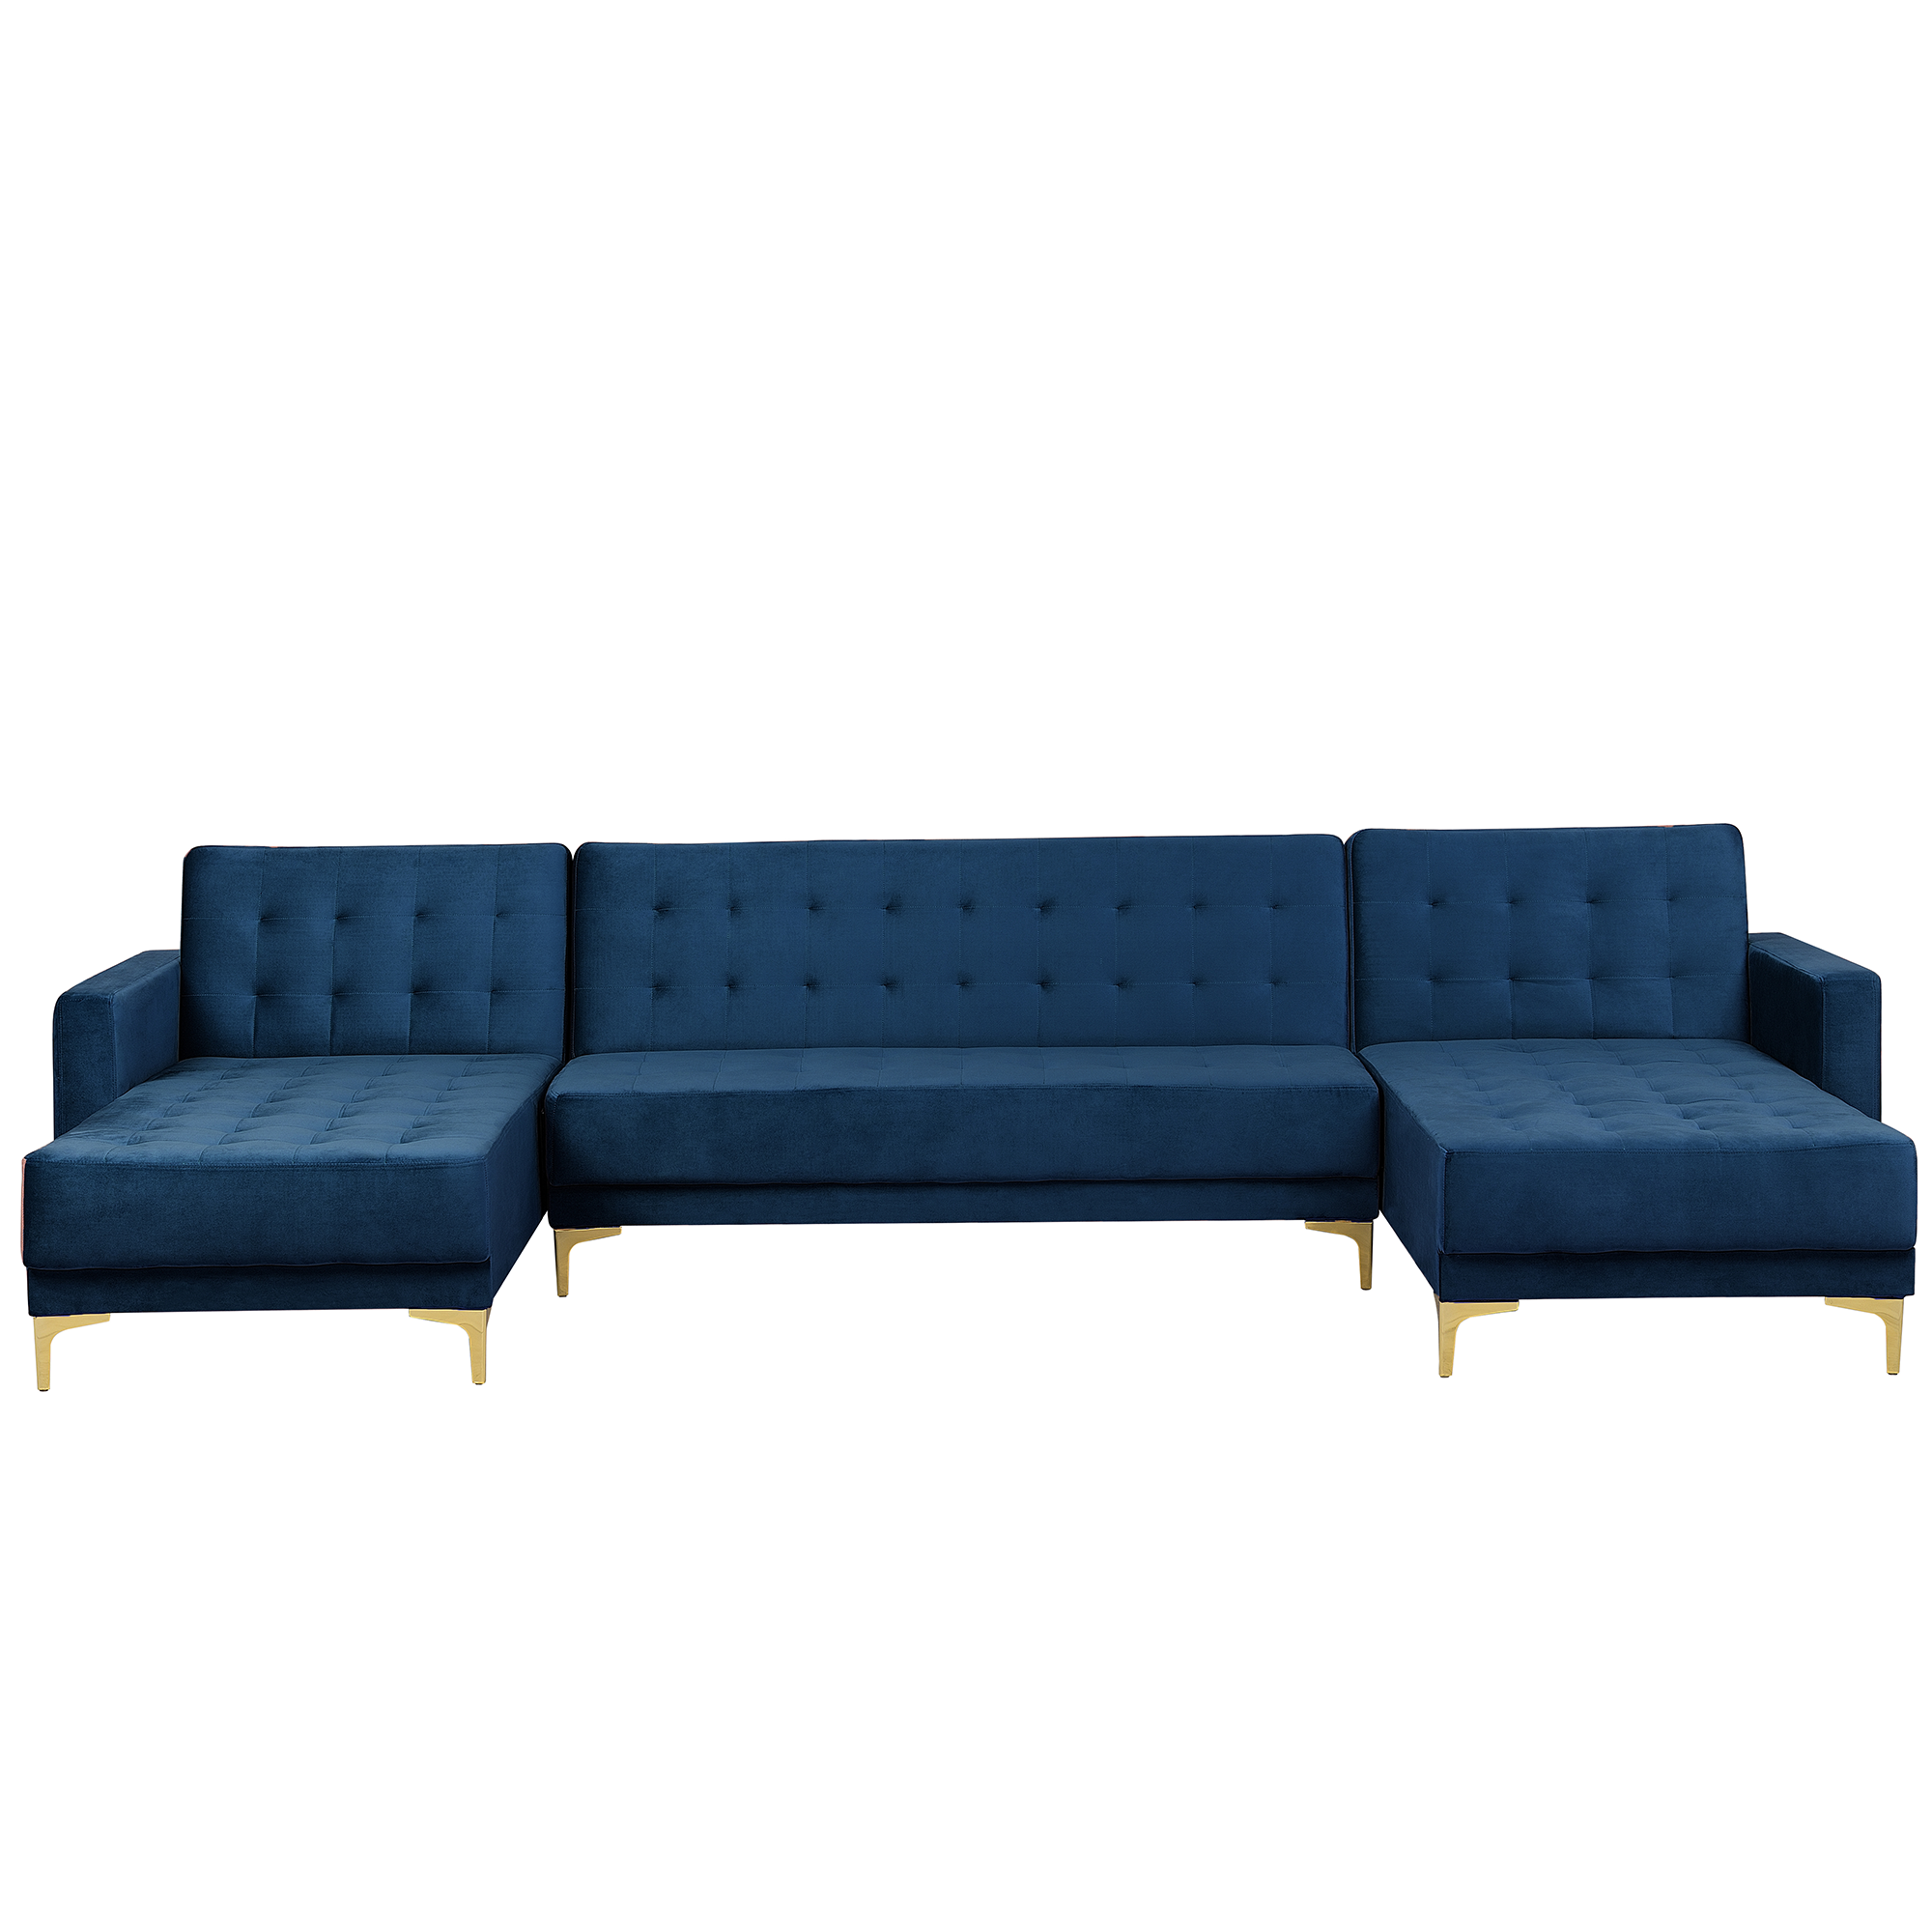 Beliani Corner Sofa Bed Navy Blue Velvet Tufted Fabric Modern U-Shaped Modular 5 Seater with Chaise Longues